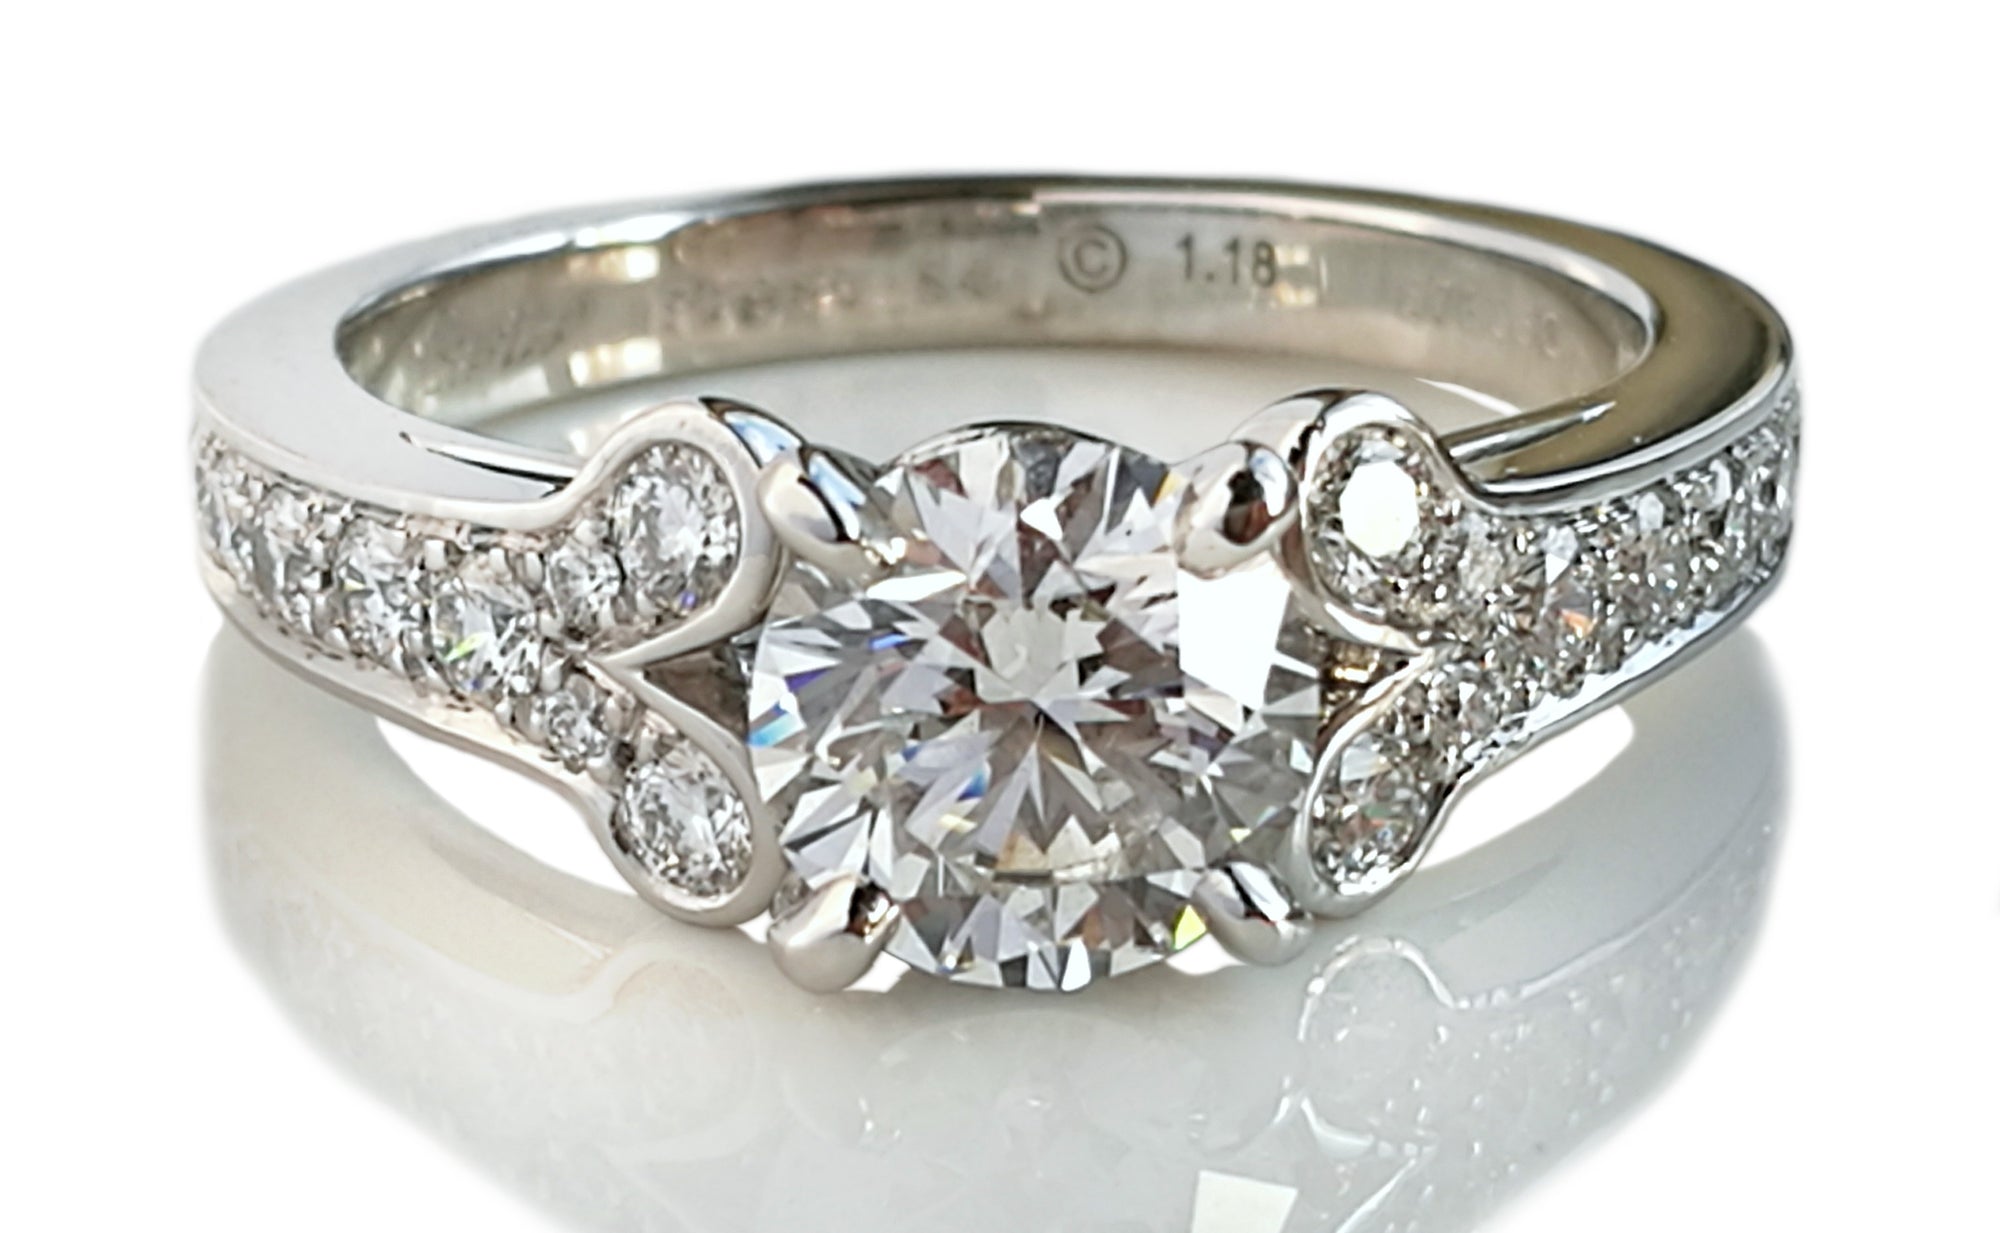 Cartier 1.18ct E/VVS1 Triple-X Ballerine Round Brilliant Diamond Engagement Ring